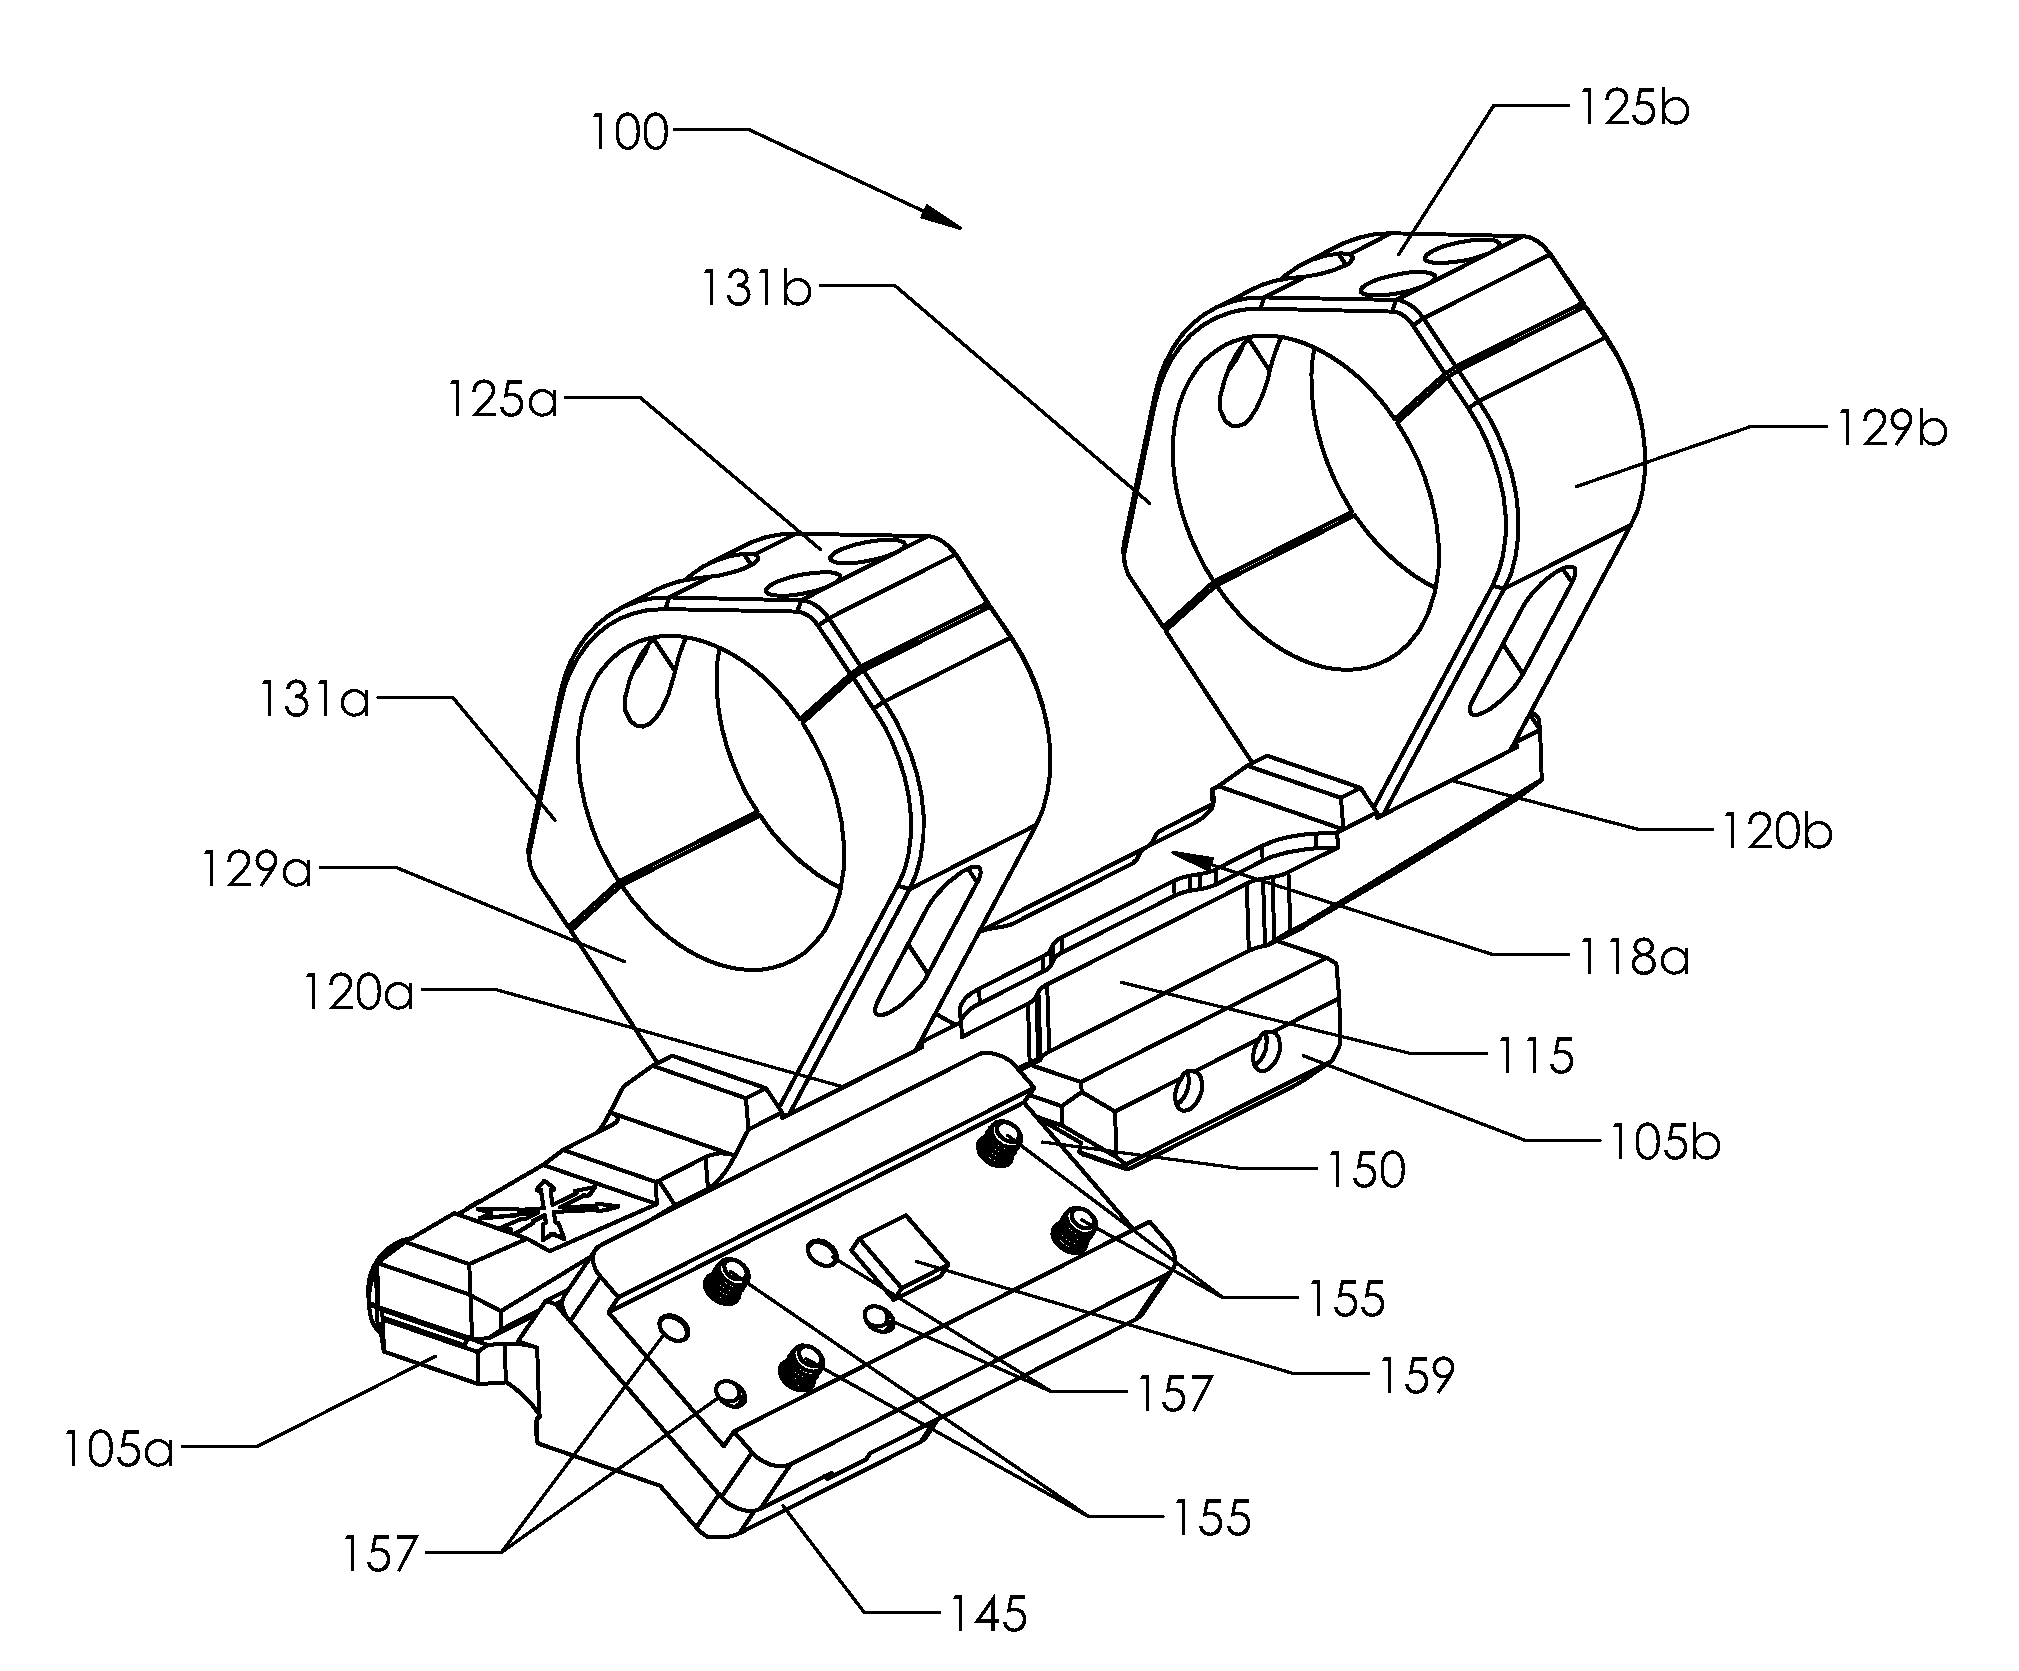 Modular scope mount assembly